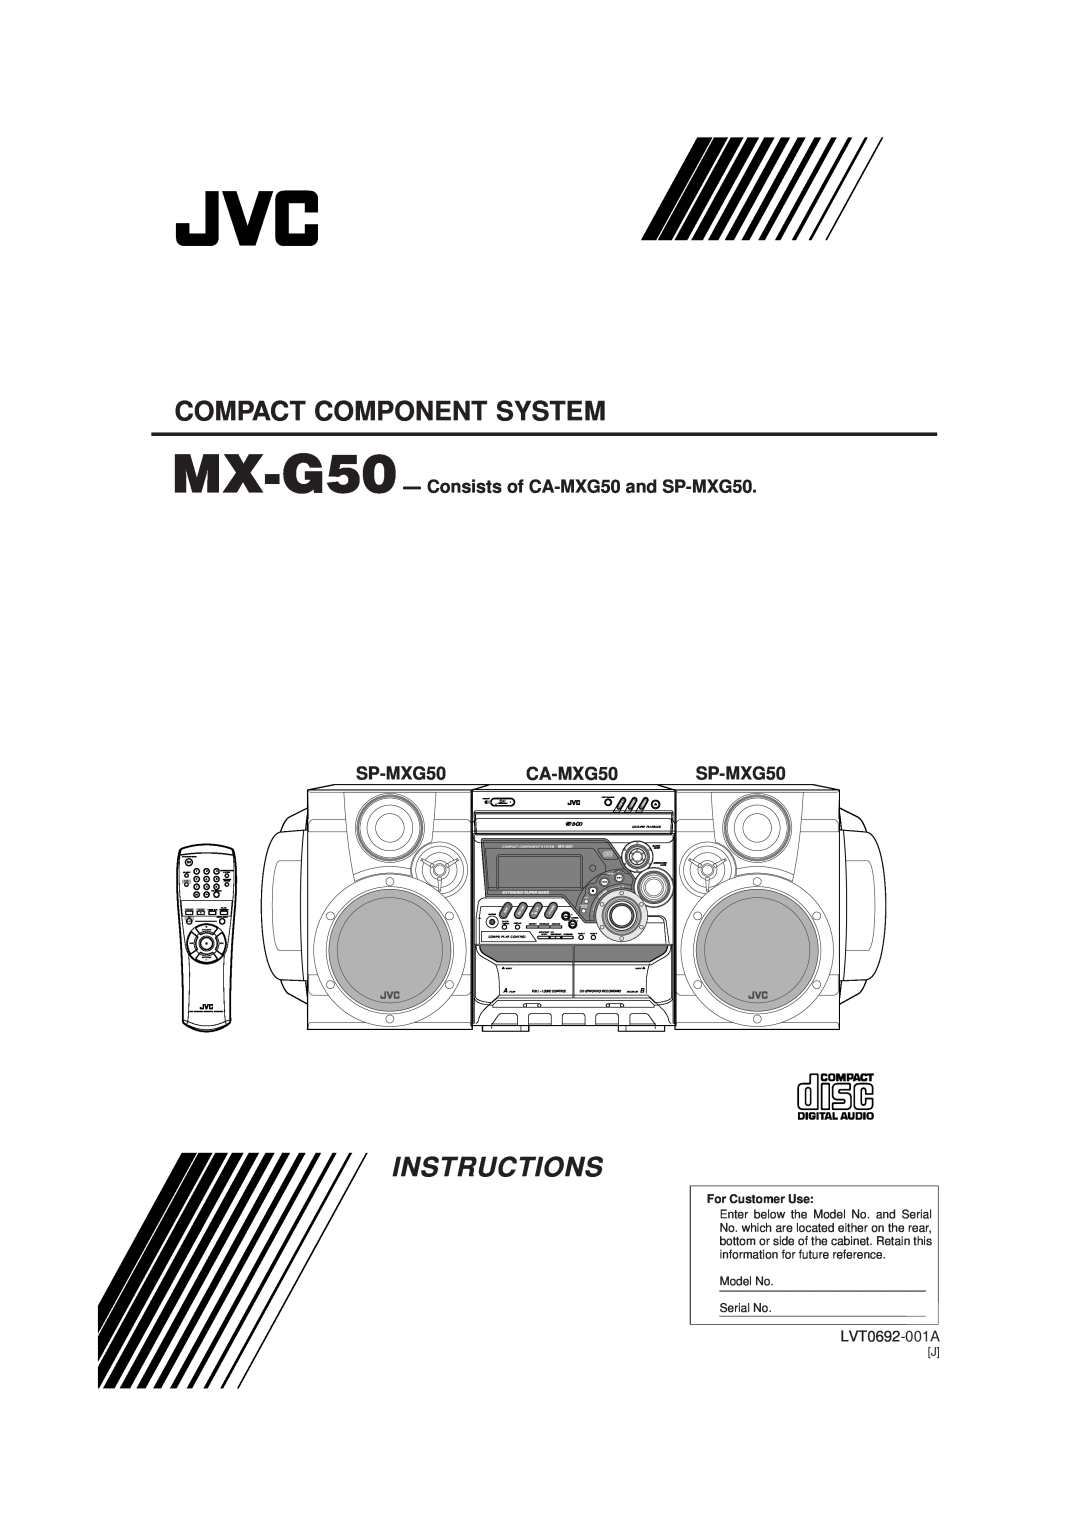 JVC manual Instructions, LVT0692-001A, Compact Component System, MX-G50-Consists of CA-MXG50and SP-MXG50, Preset 